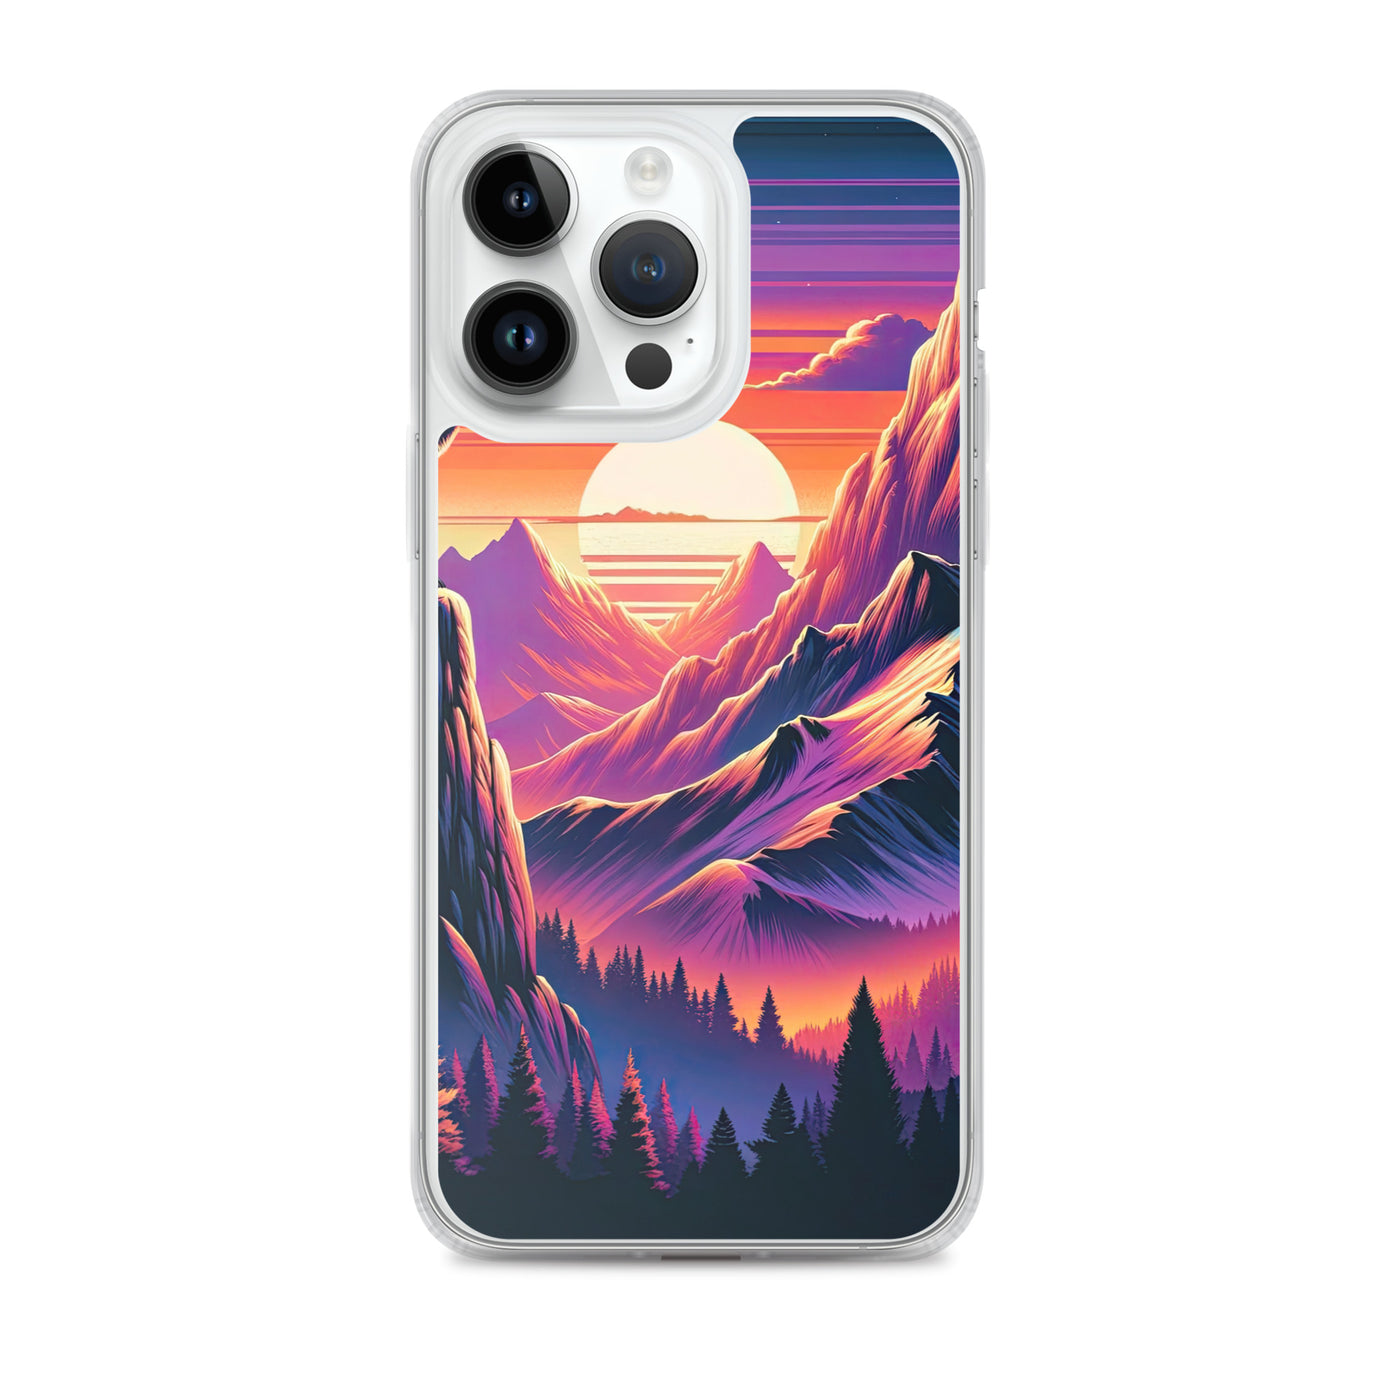 Alpen-Sonnenuntergang mit Bär auf Hügel, warmes Himmelsfarbenspiel - iPhone Schutzhülle (durchsichtig) camping xxx yyy zzz iPhone 14 Pro Max